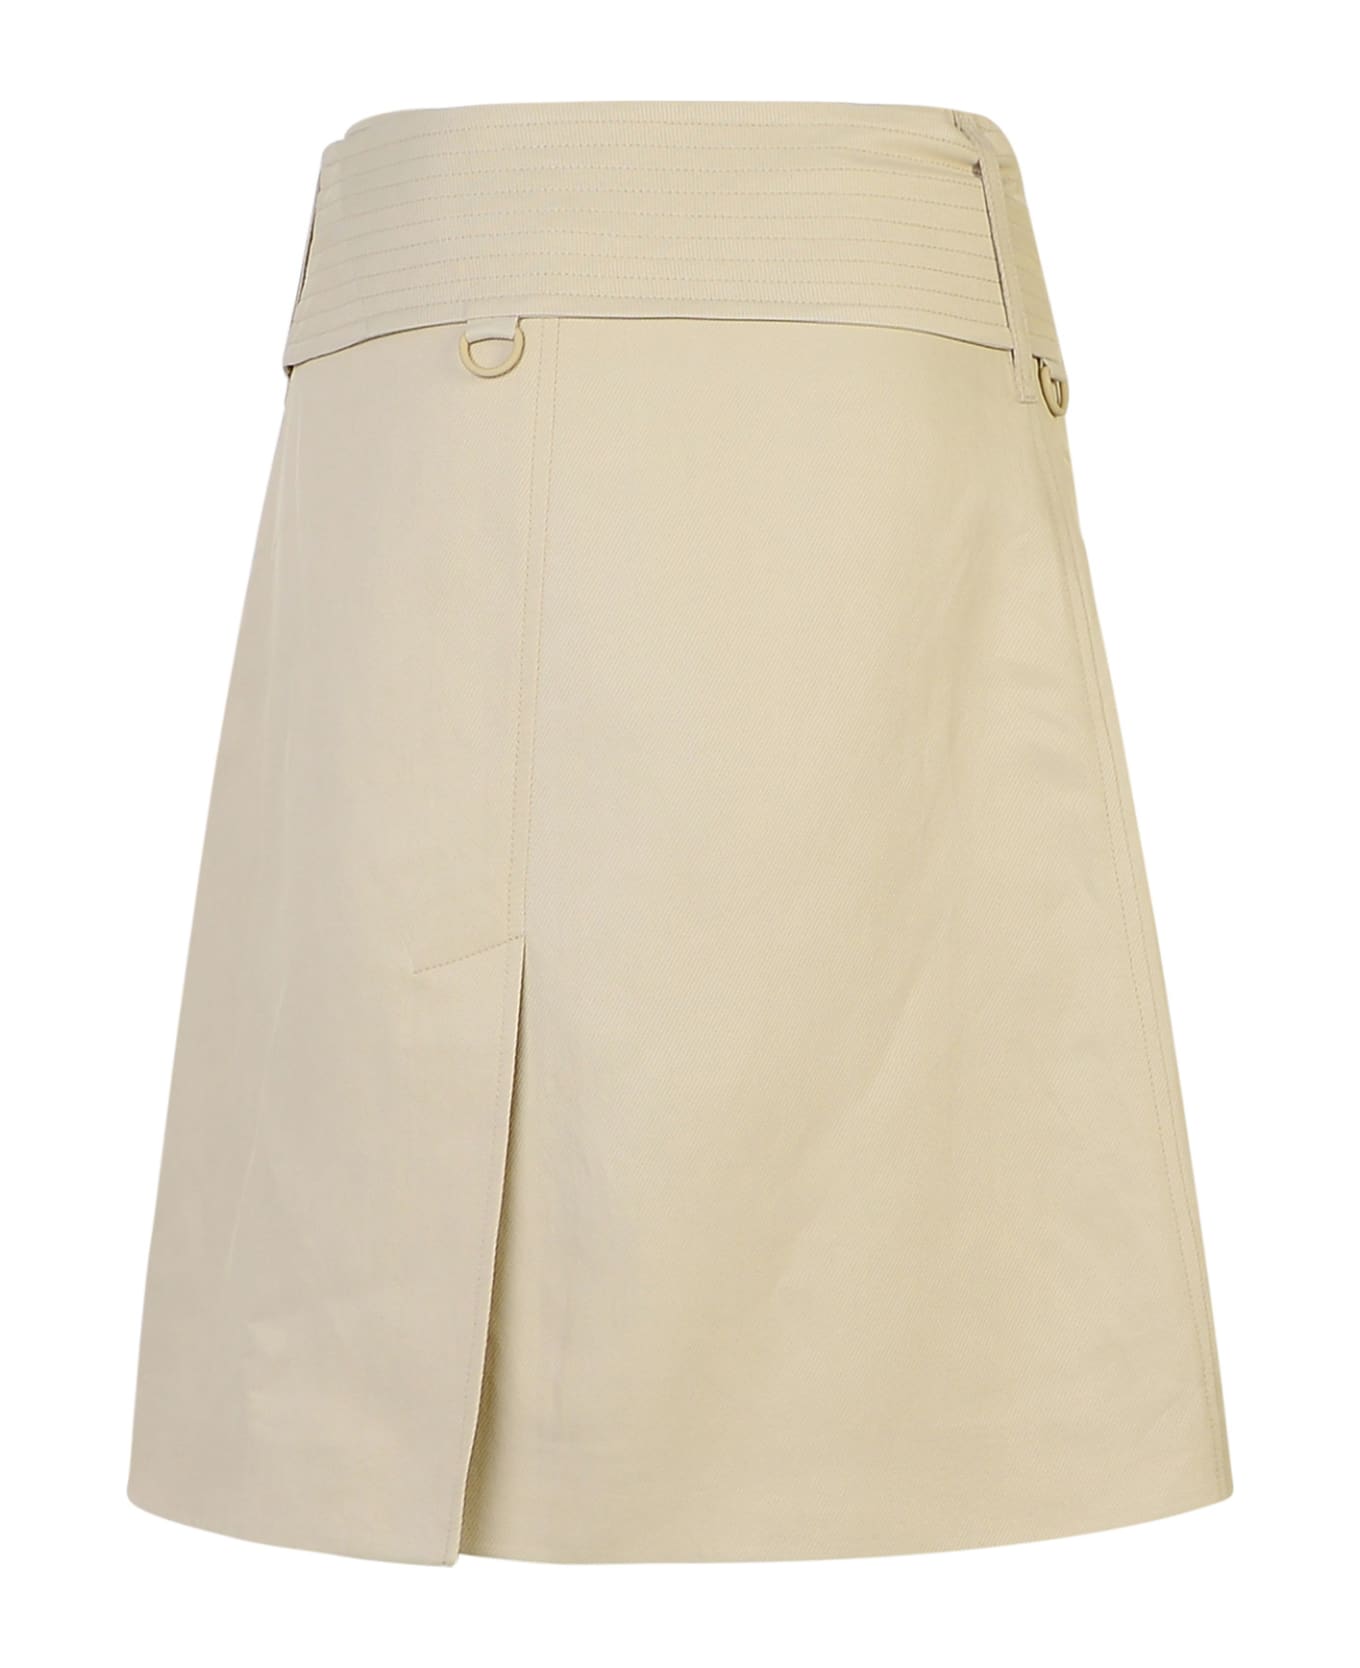 Burberry 'burberry' 'midi' Beige Miniskirt - Beige